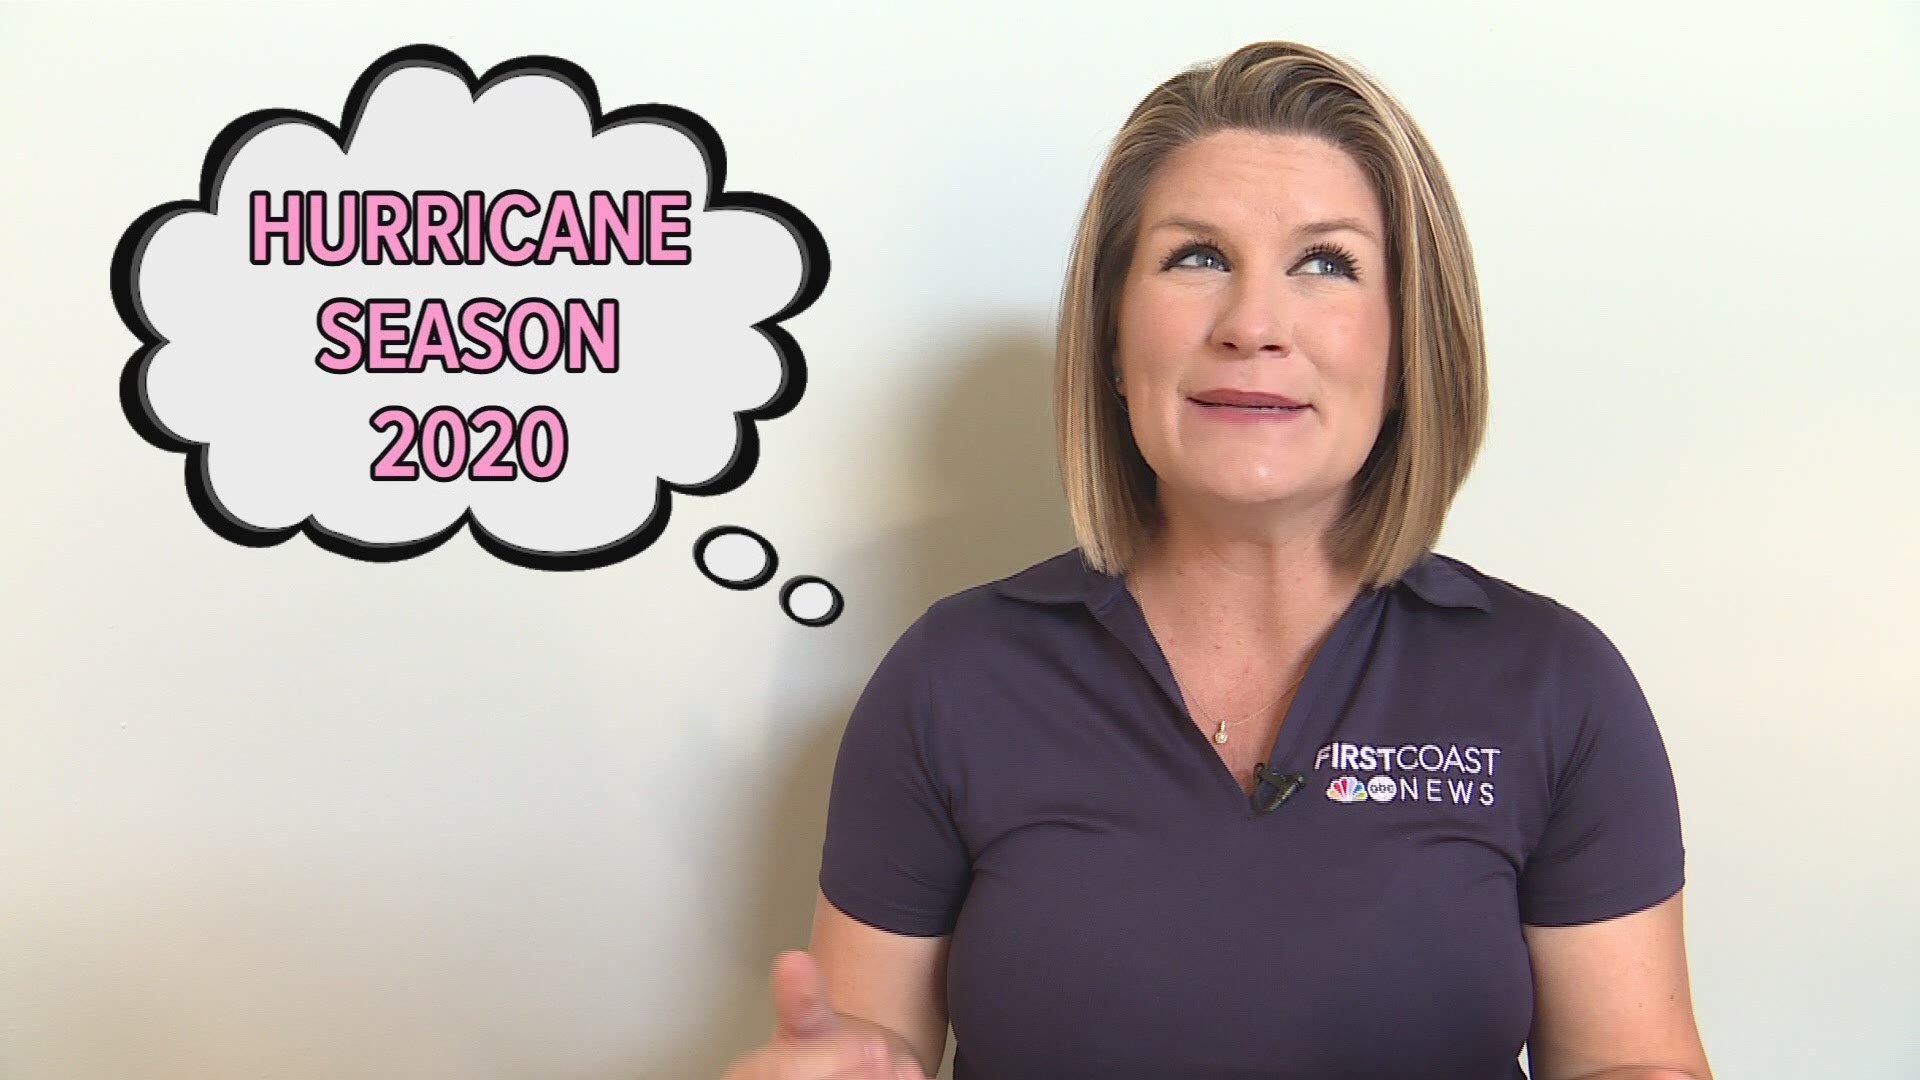 On paper, the 2020 Atlantic hurricane season ends on November 30. But could it last into the month of December? Meteorologist Lauren Rautenkranz explains.